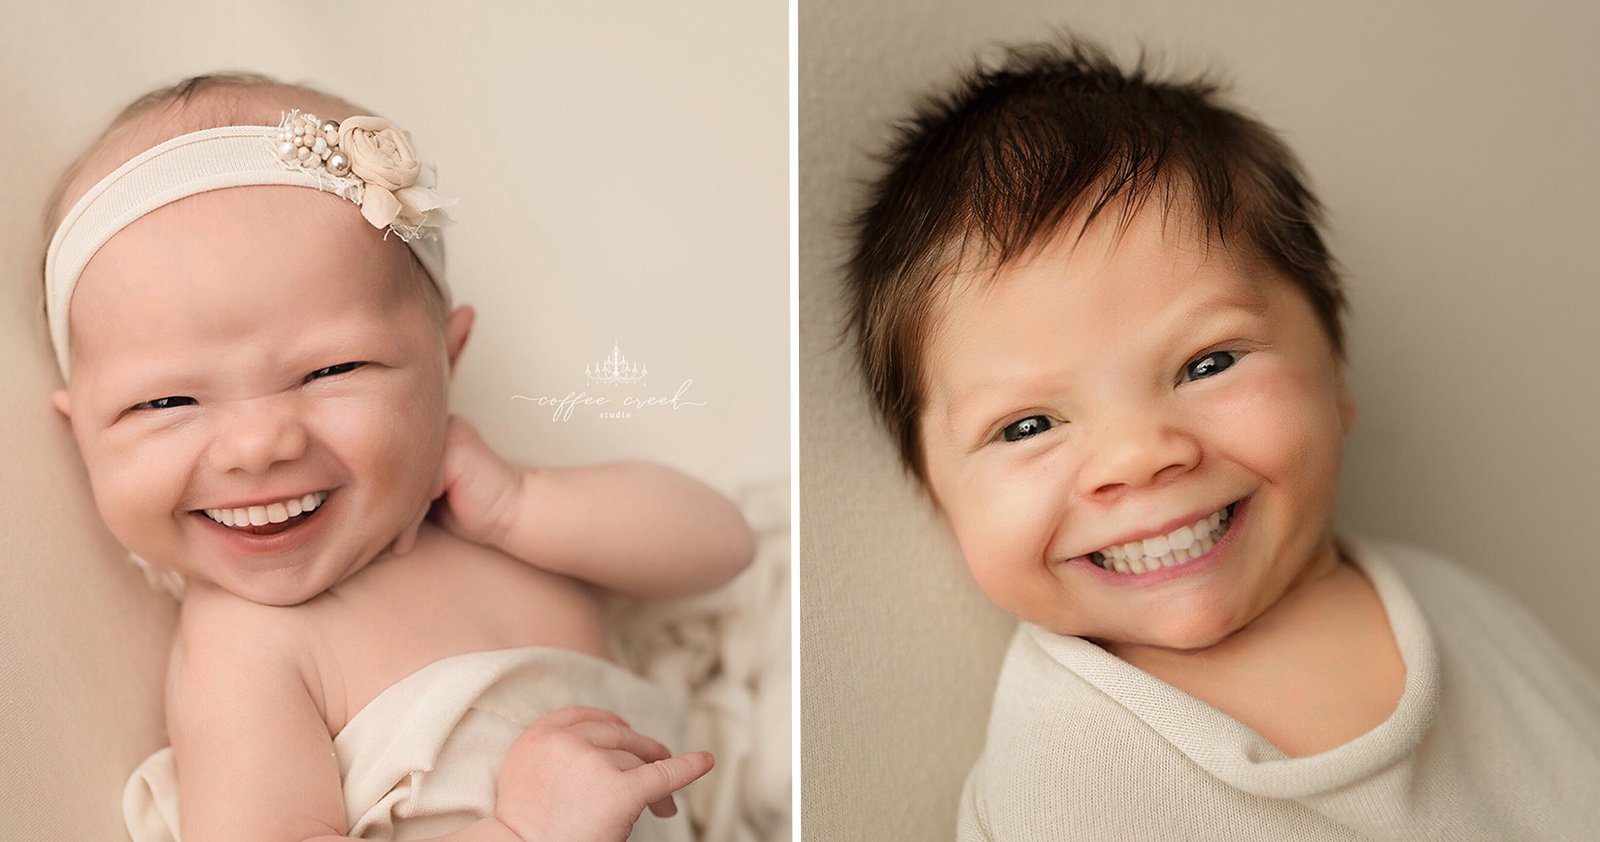  newborn photographer adds teeth baby portraits hilarious 